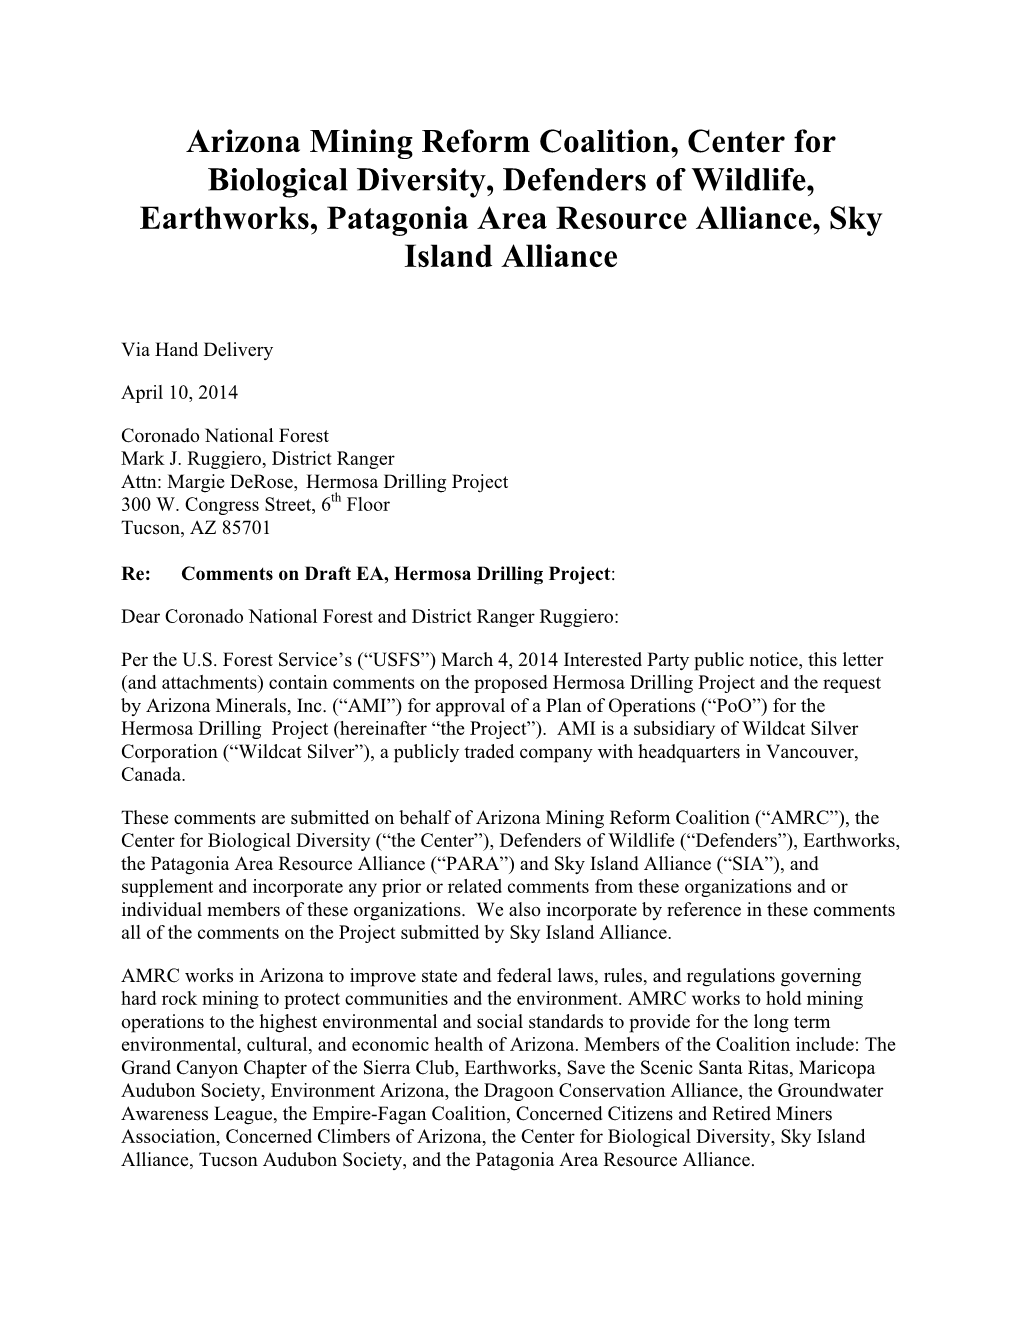 Arizona Mining Reform Coalition, Center for Biological Diversity, Defenders of Wildlife, Earthworks, Patagonia Area Resource Alliance, Sky Island Alliance